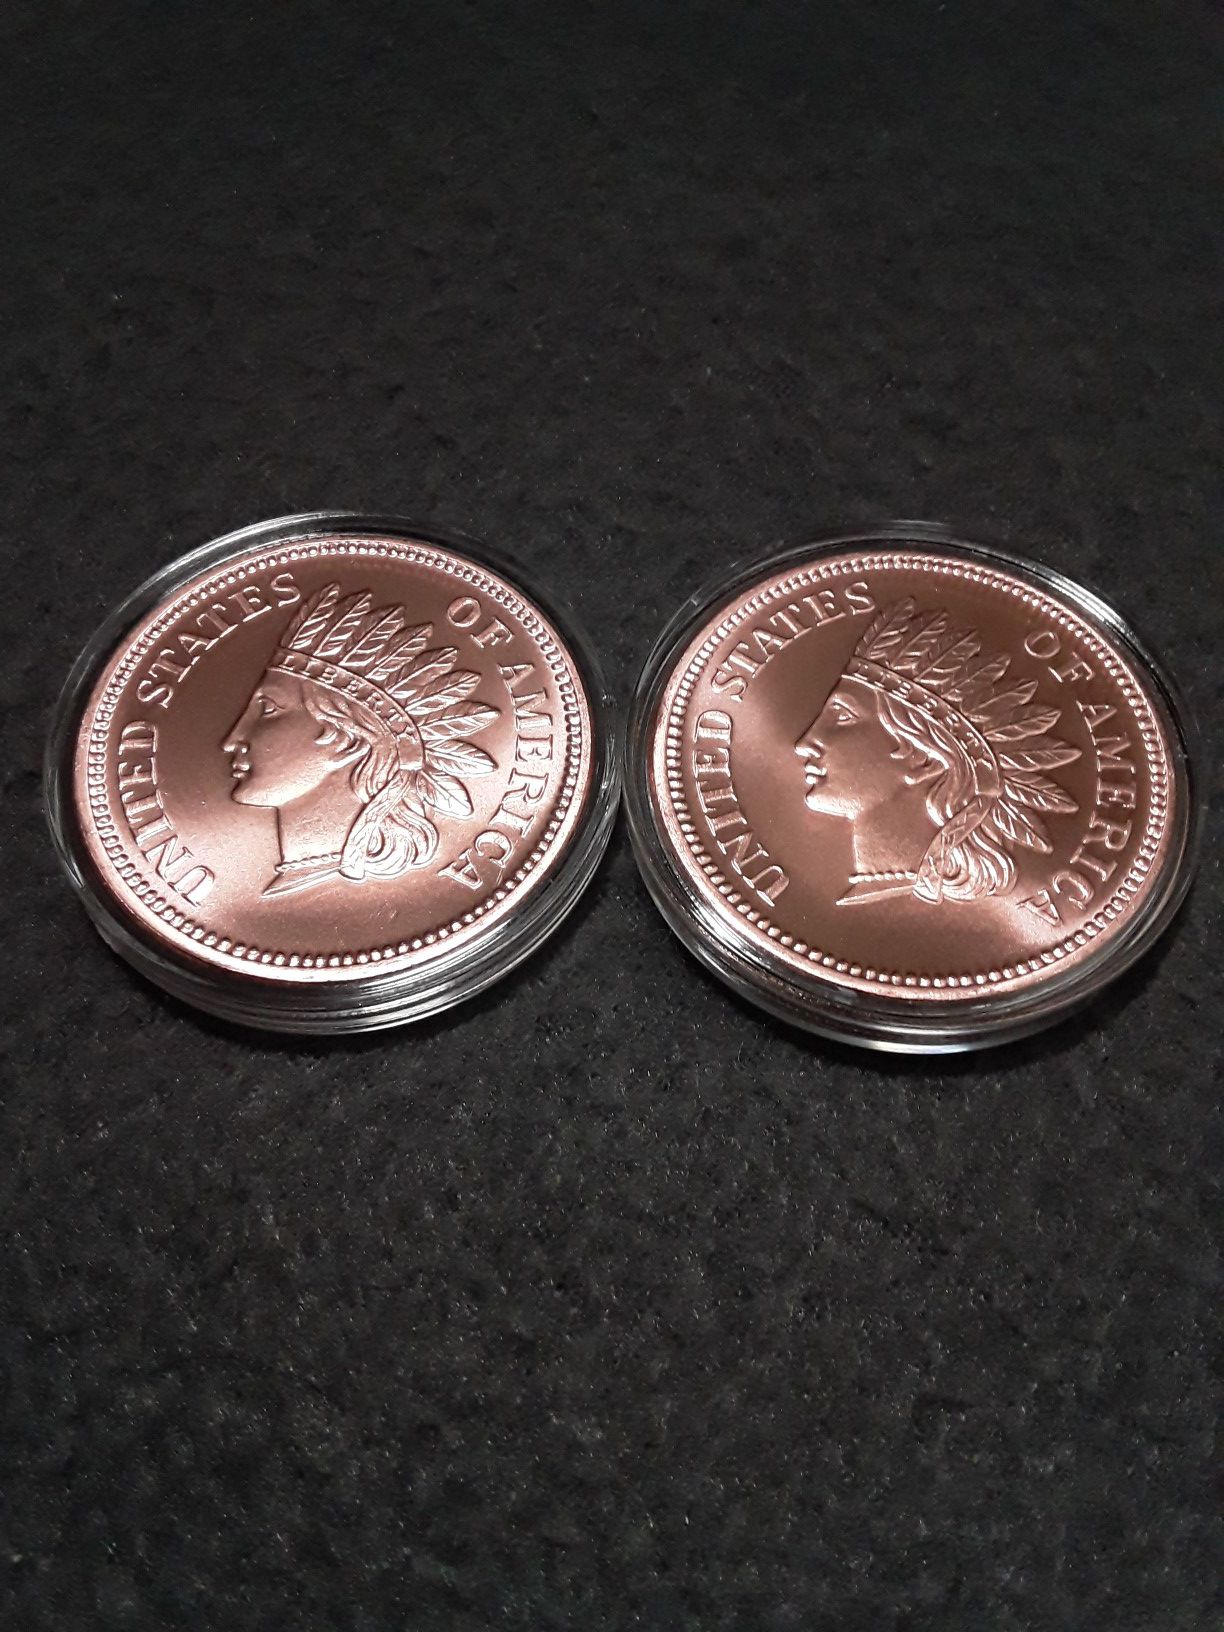 Copper Indian head pennies